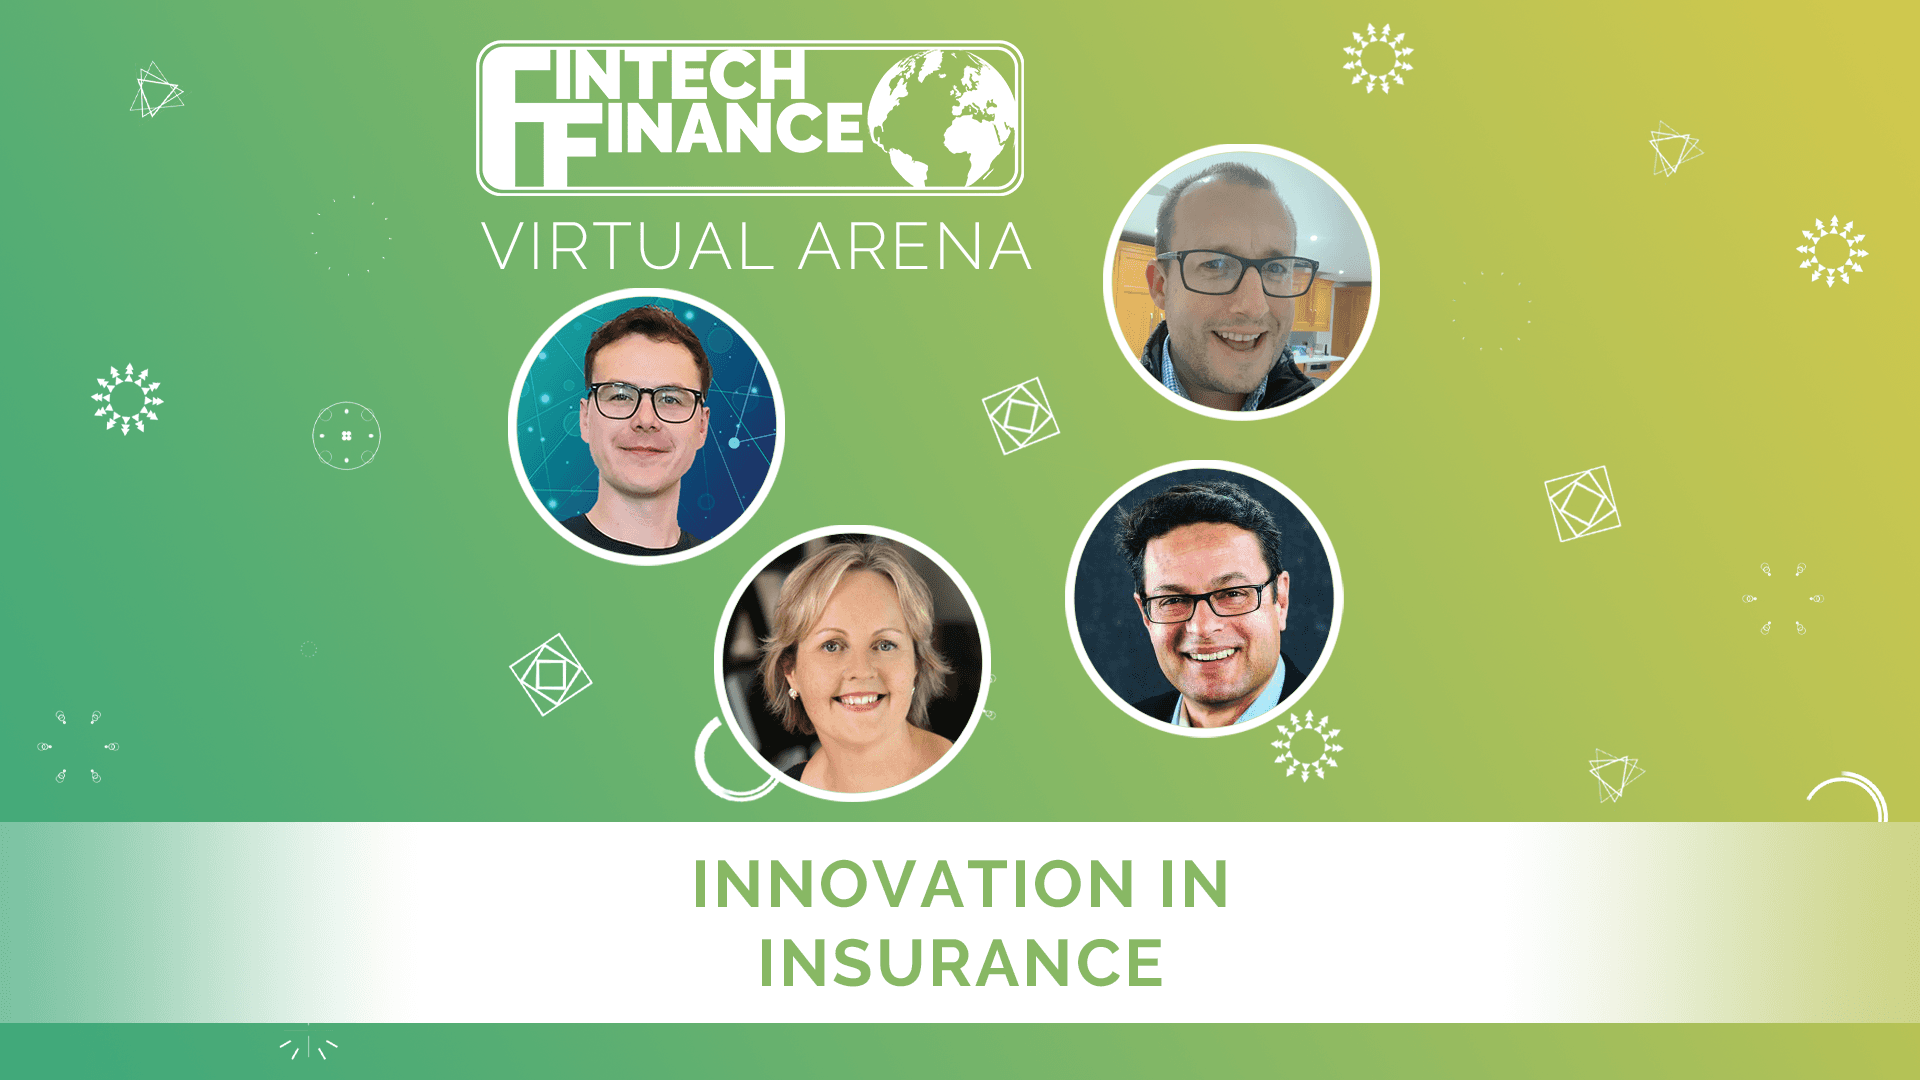 Fintech Finance Virtual Arena: Innovation in Insurance